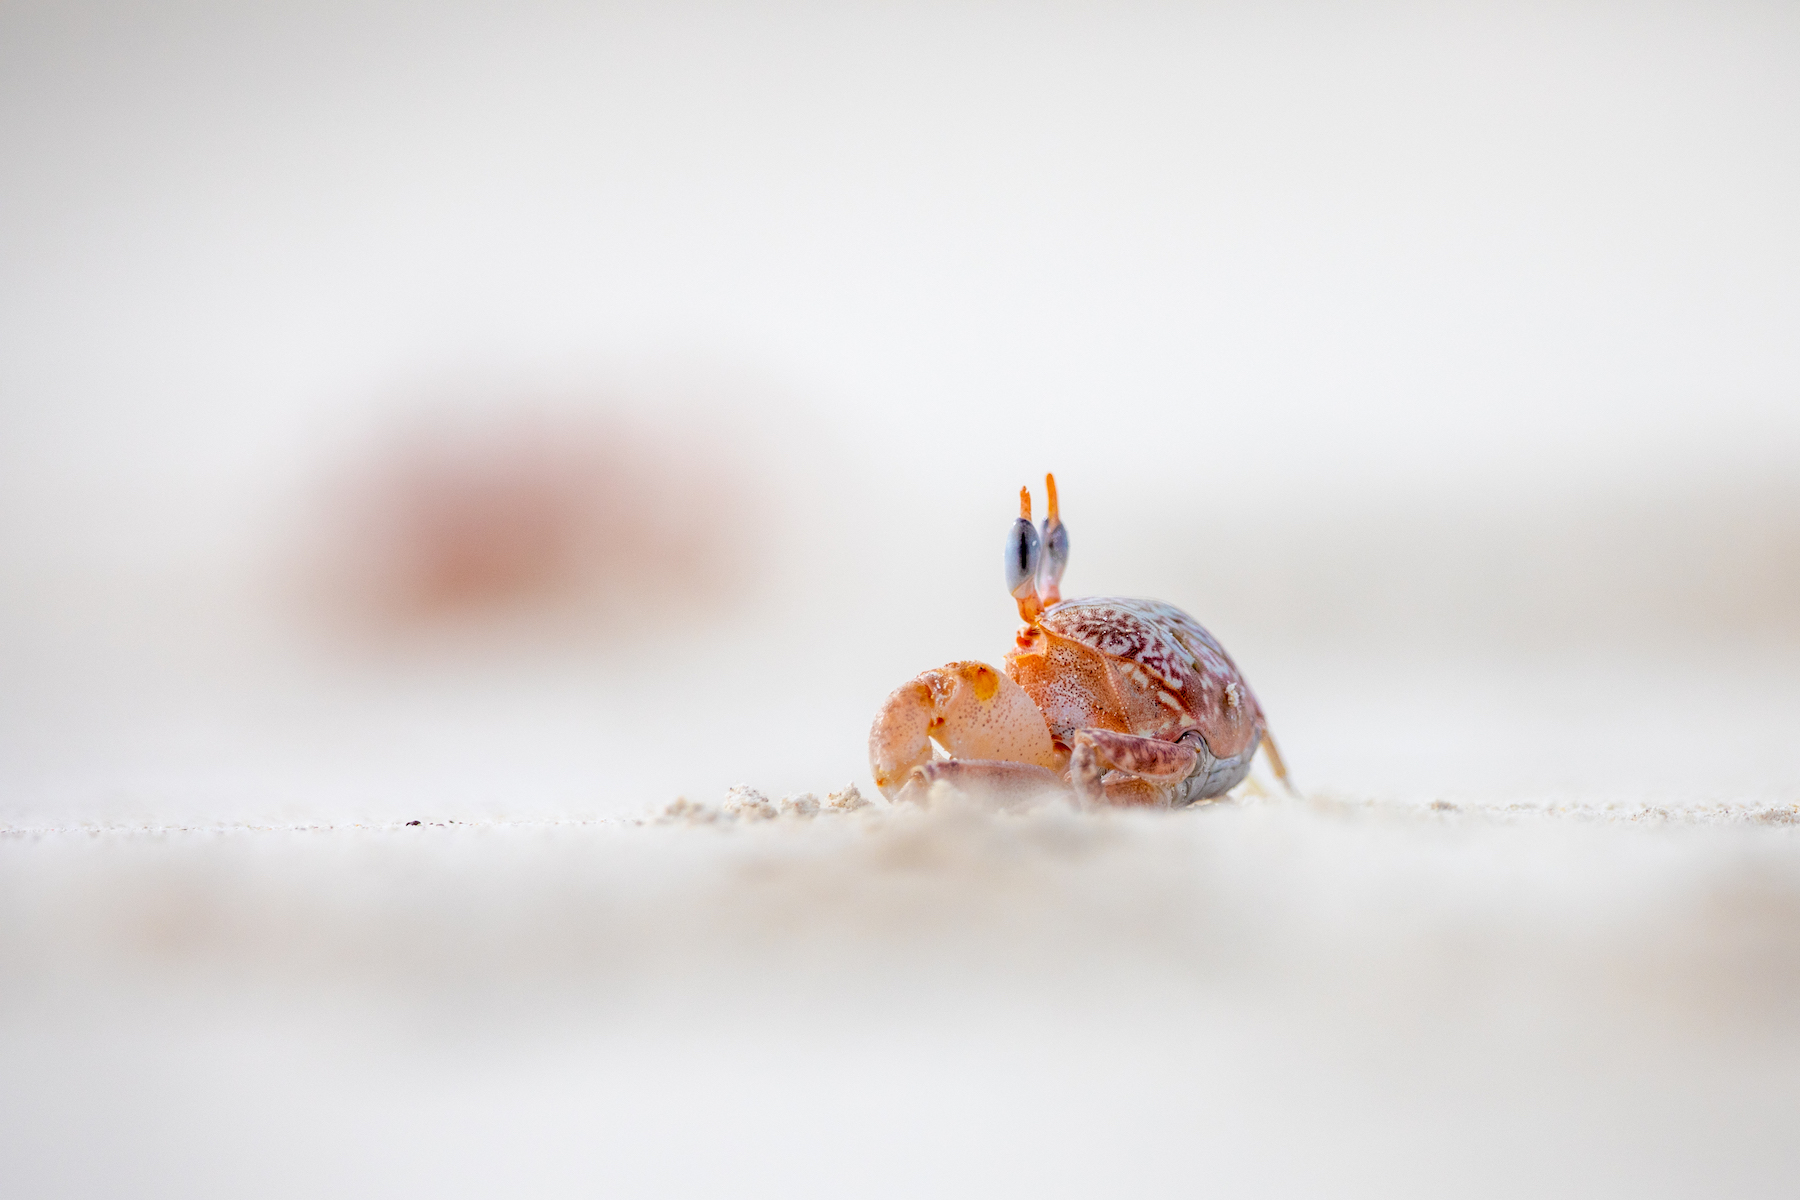 Focal plain shot of a Ghost Crab (image by Inger Vandyke)